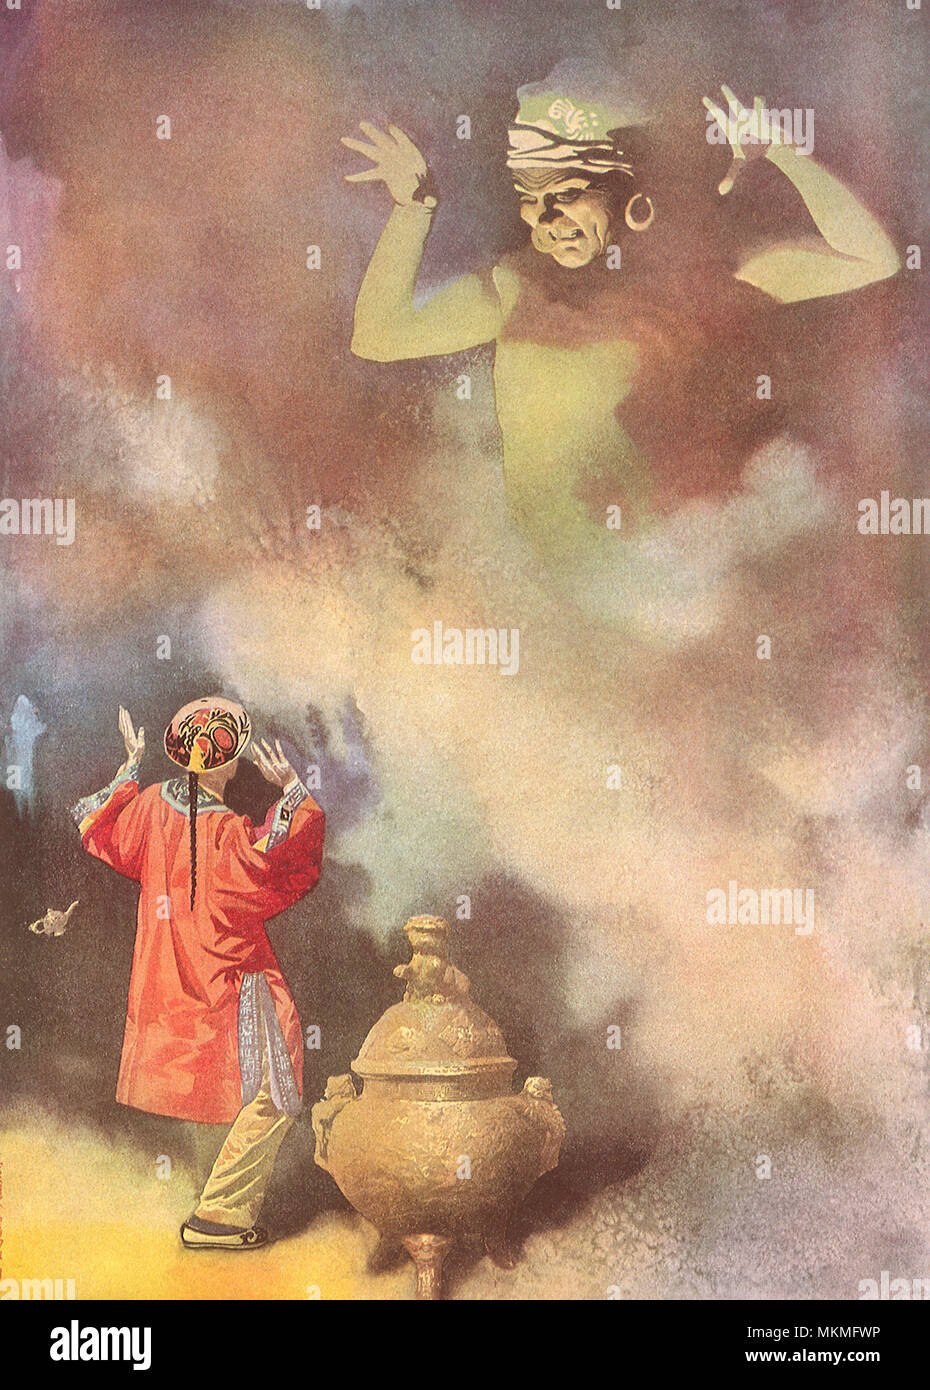 Aladdin and the Wonderful Lamp Stock Photo